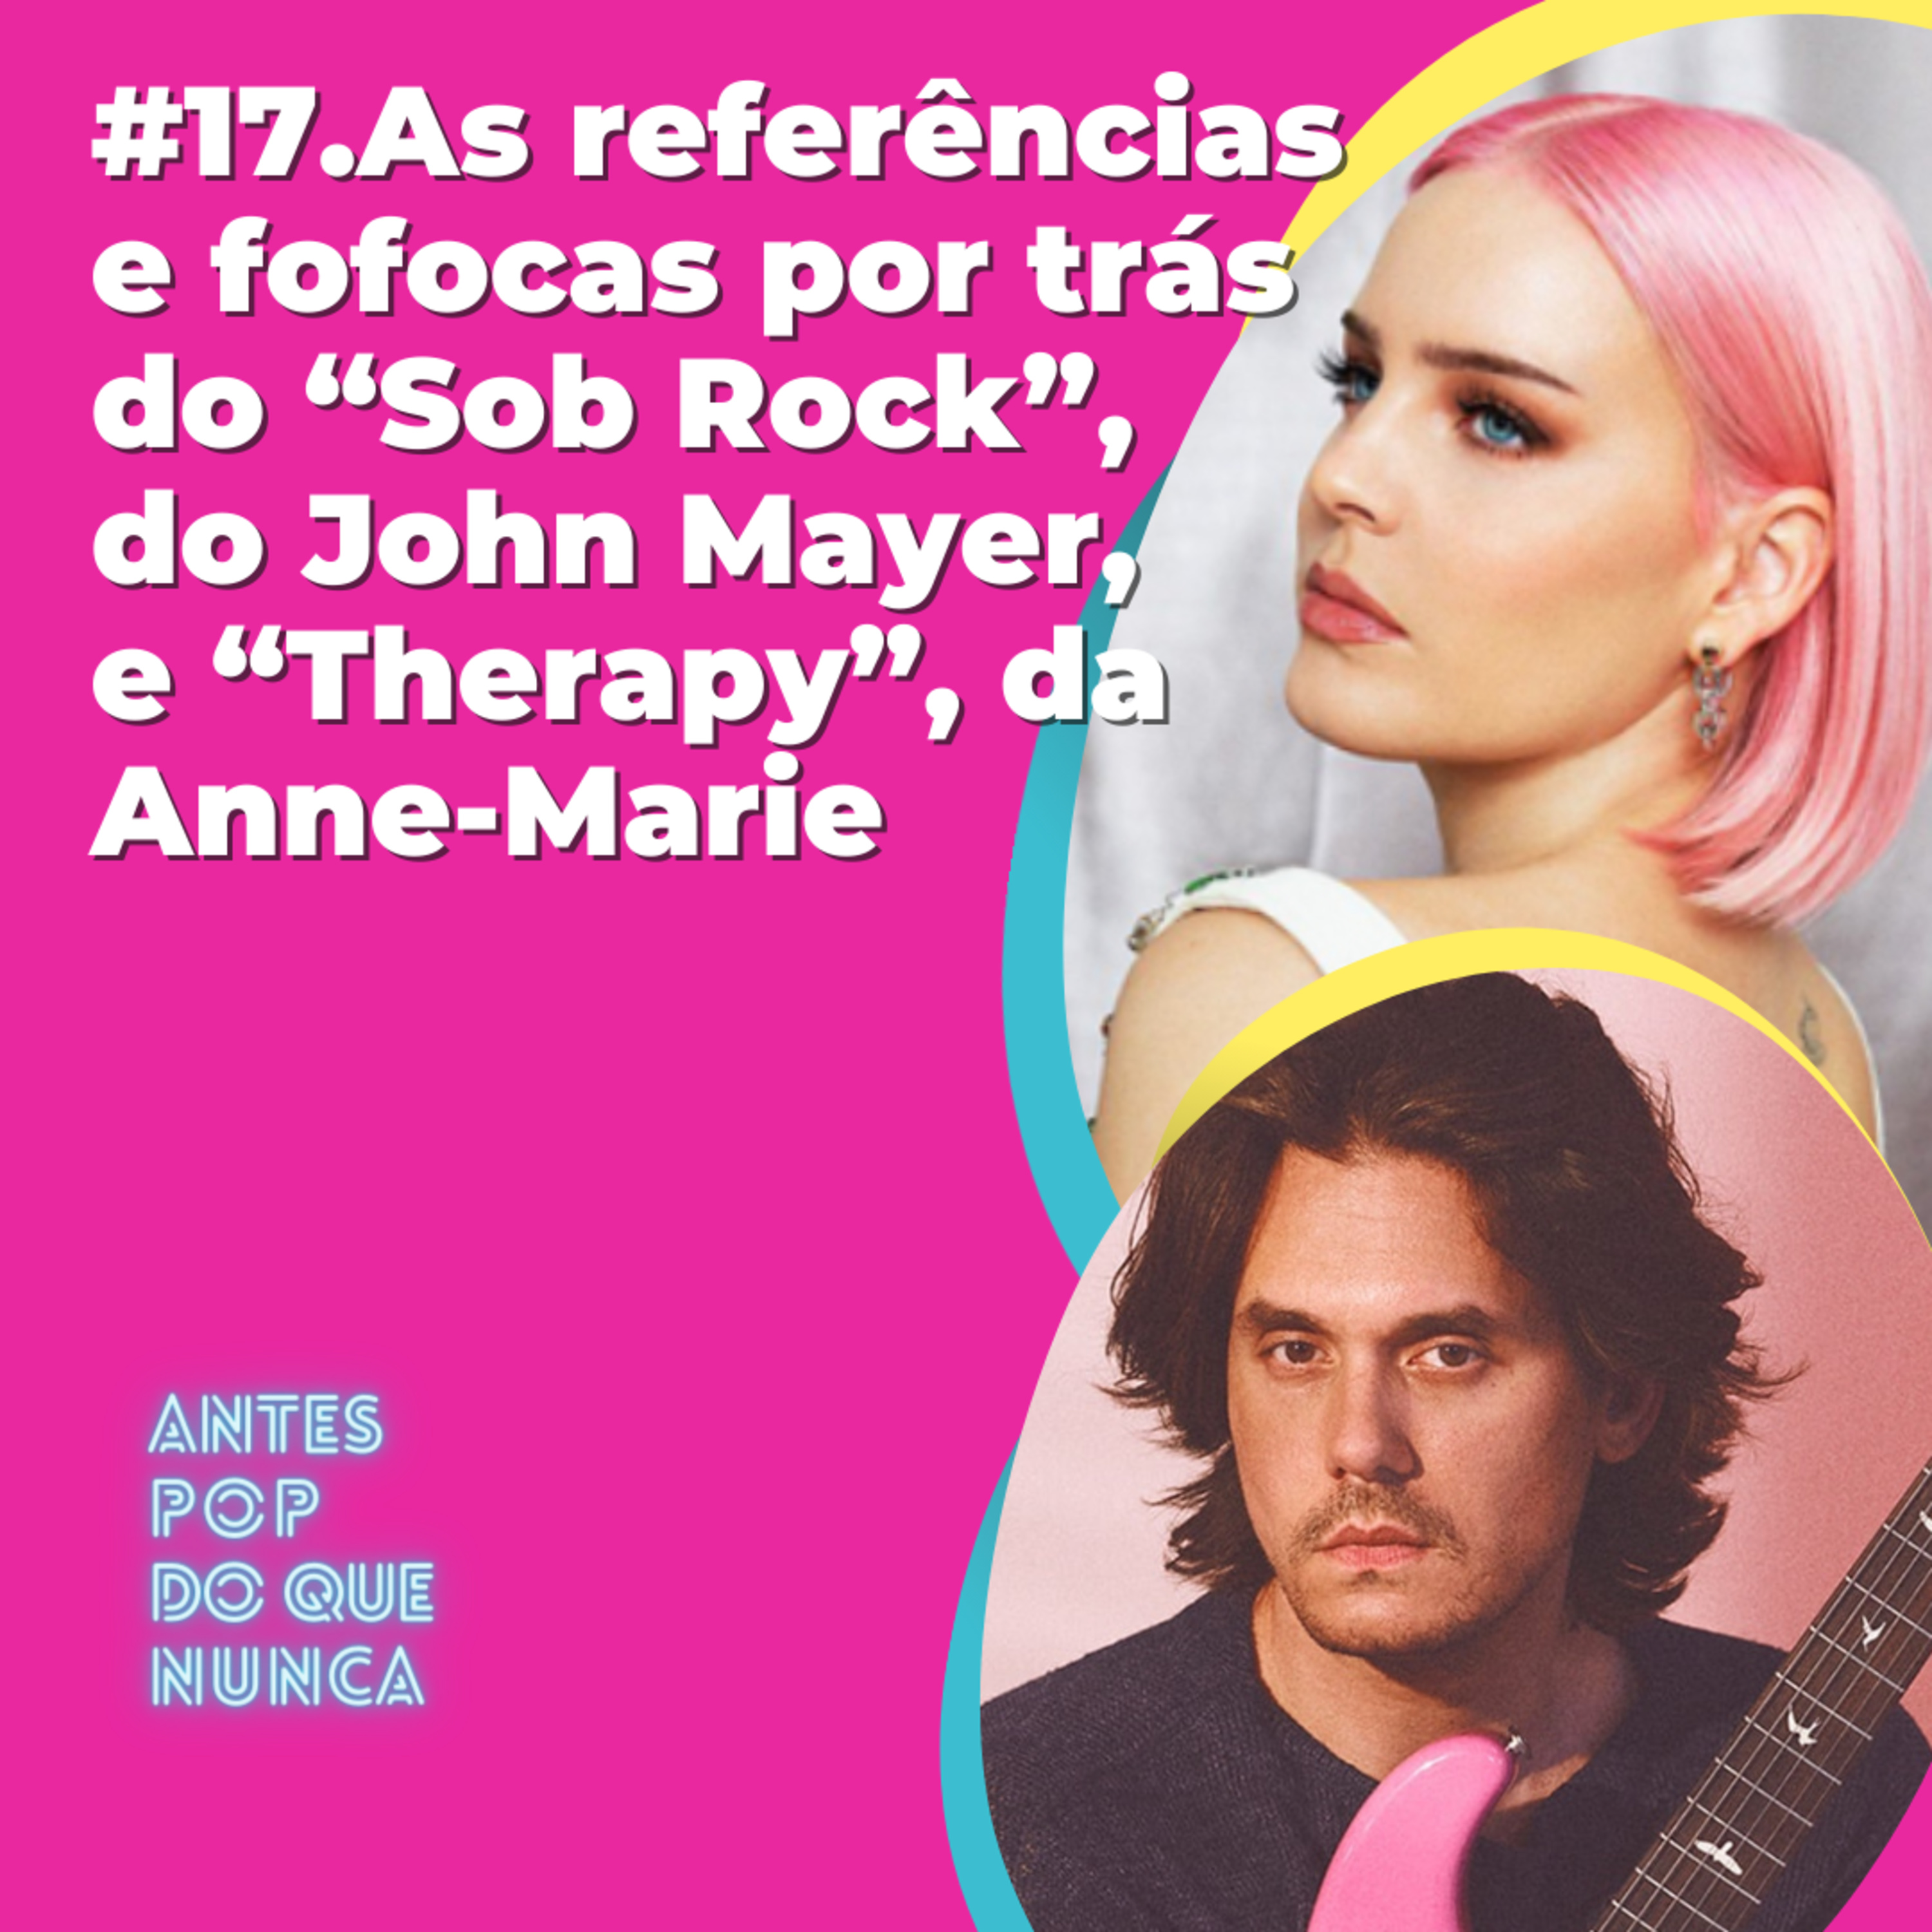 #17. As referências e fofocas por trás do “Sob Rock”, do John Mayer, e “Therapy”, da Anne-Marie